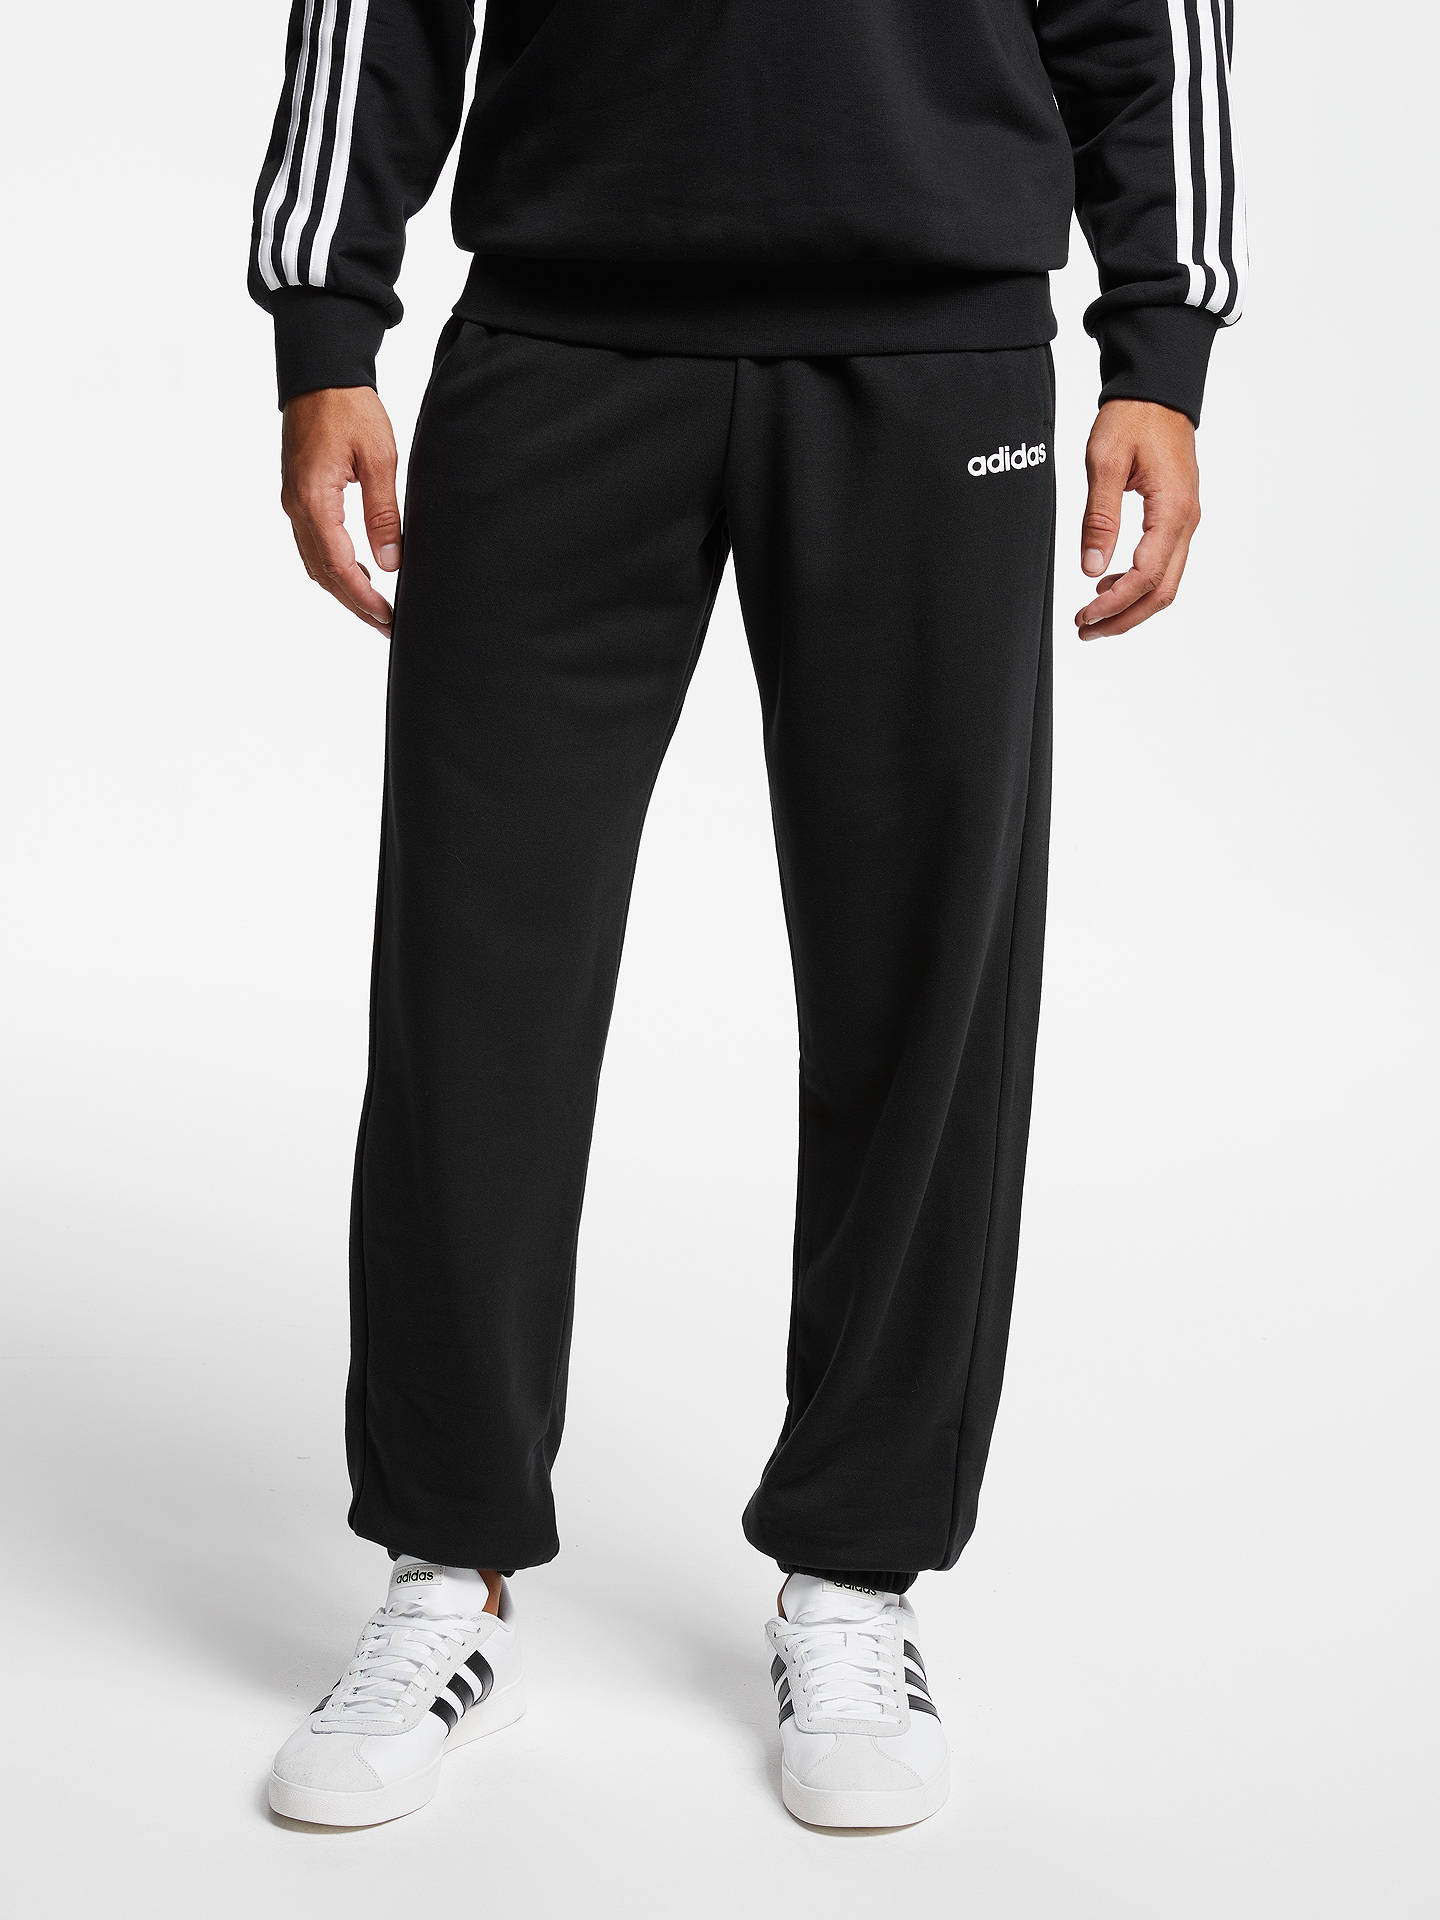 Adidas track suit pants